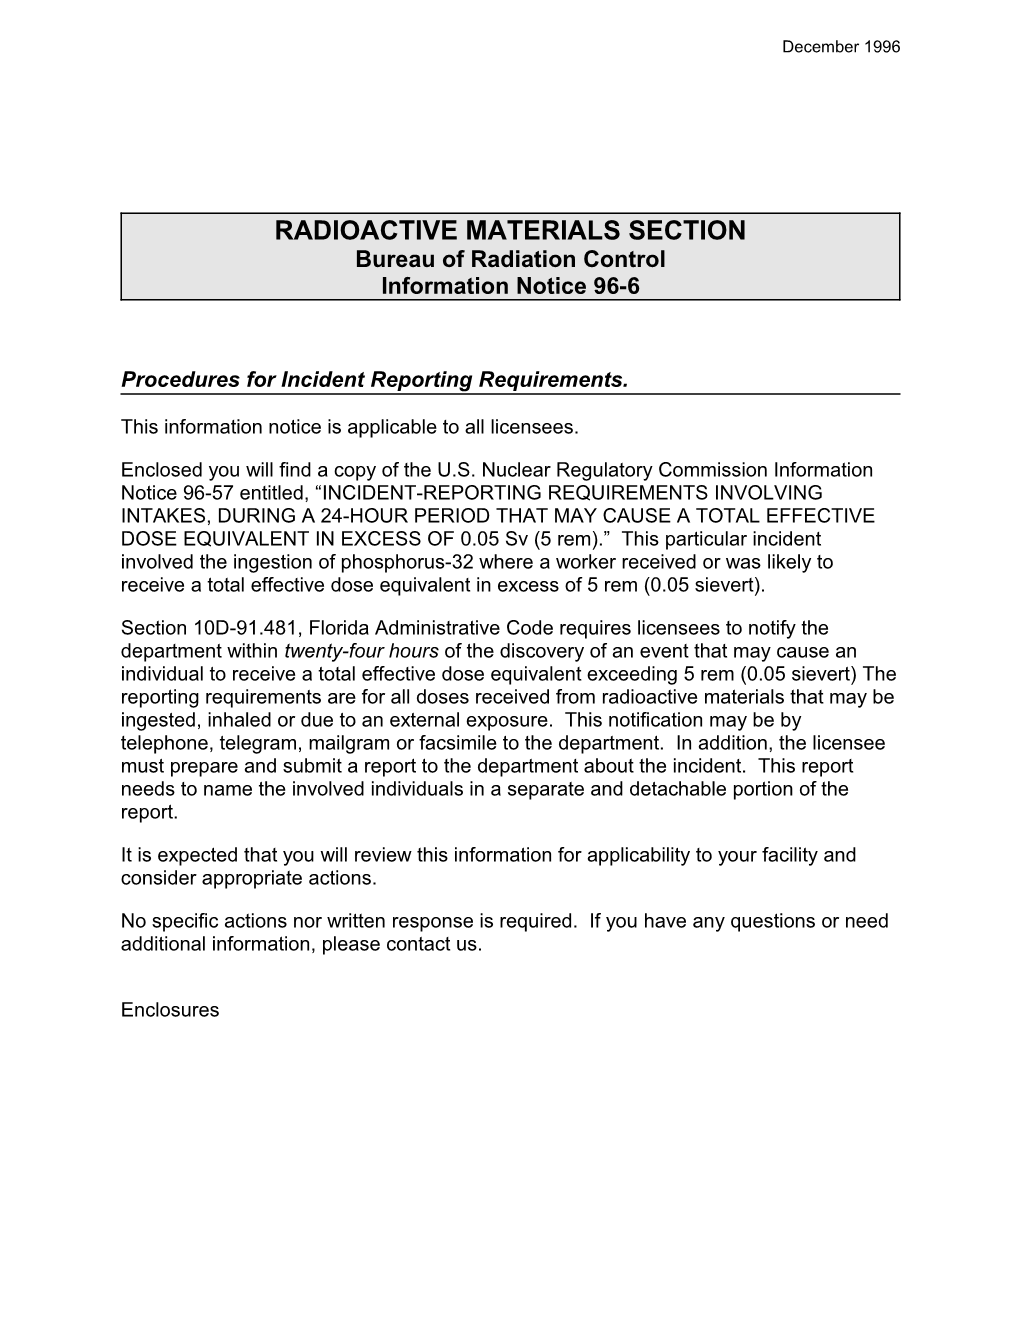 Radioactive Materials Program